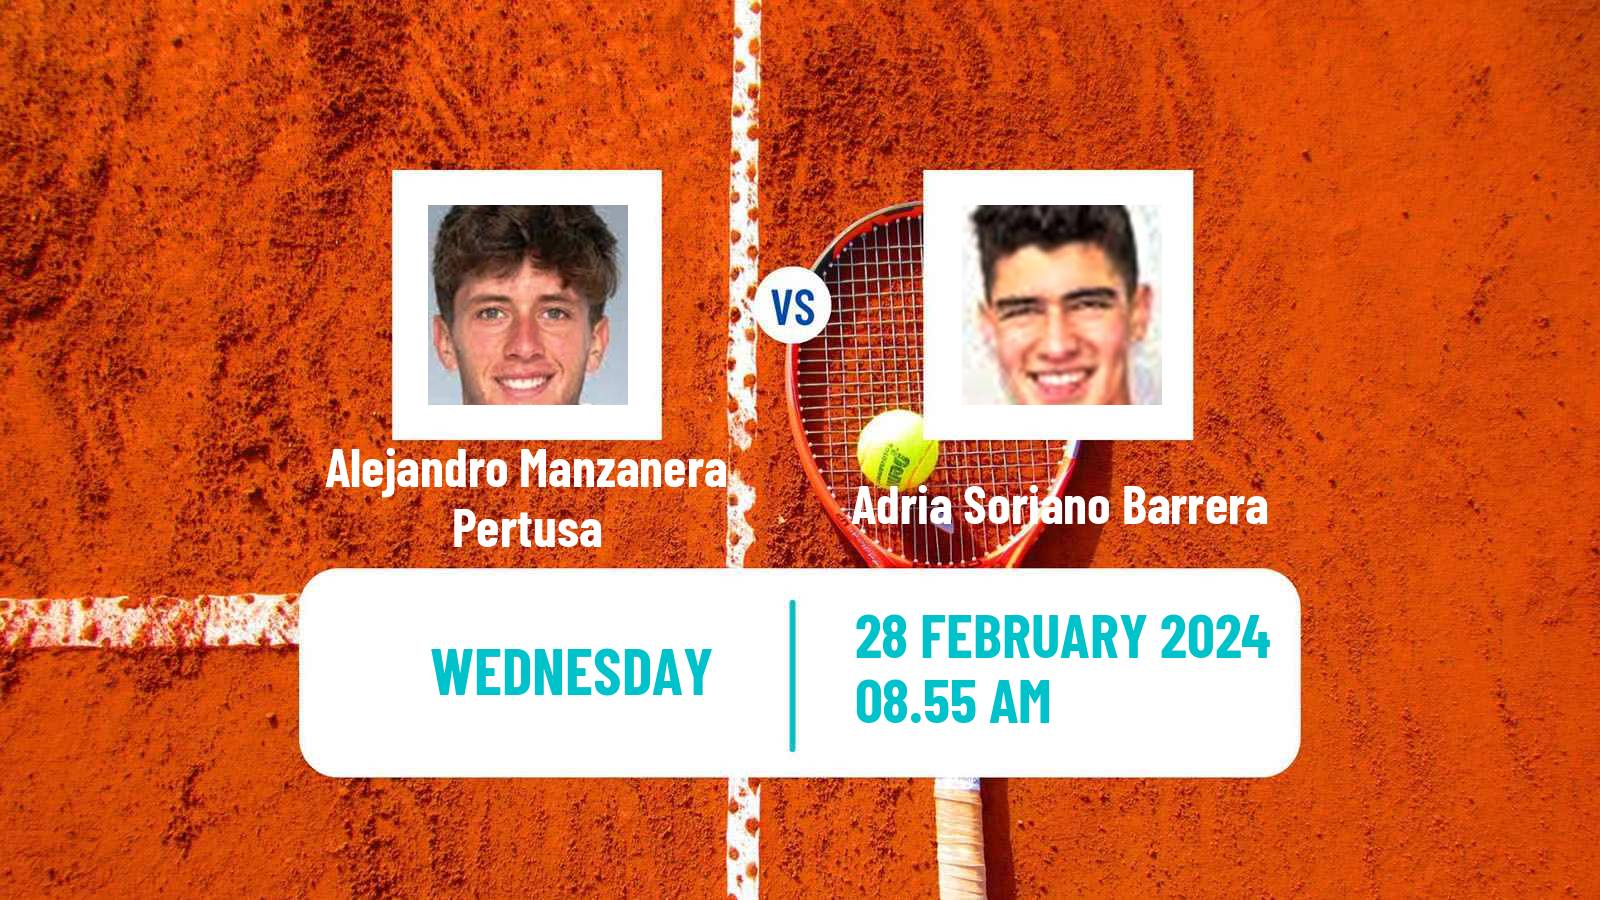 Tennis ITF M15 Villena 2 Men Alejandro Manzanera Pertusa - Adria Soriano Barrera